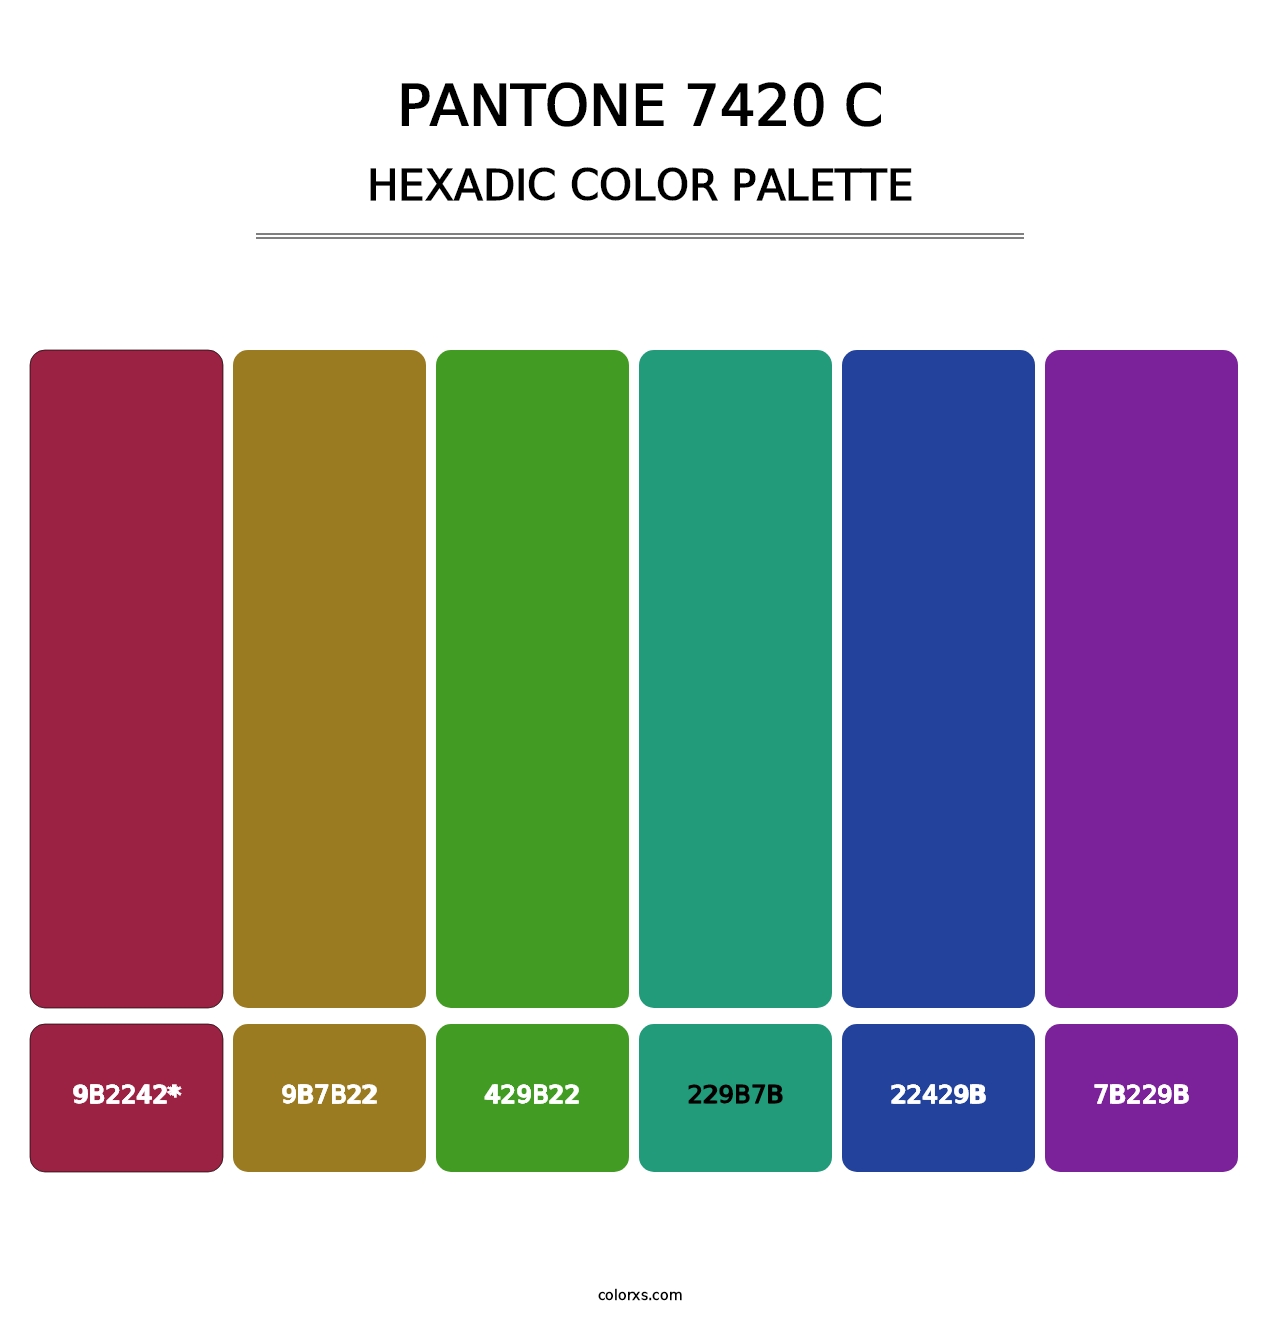 PANTONE 7420 C - Hexadic Color Palette